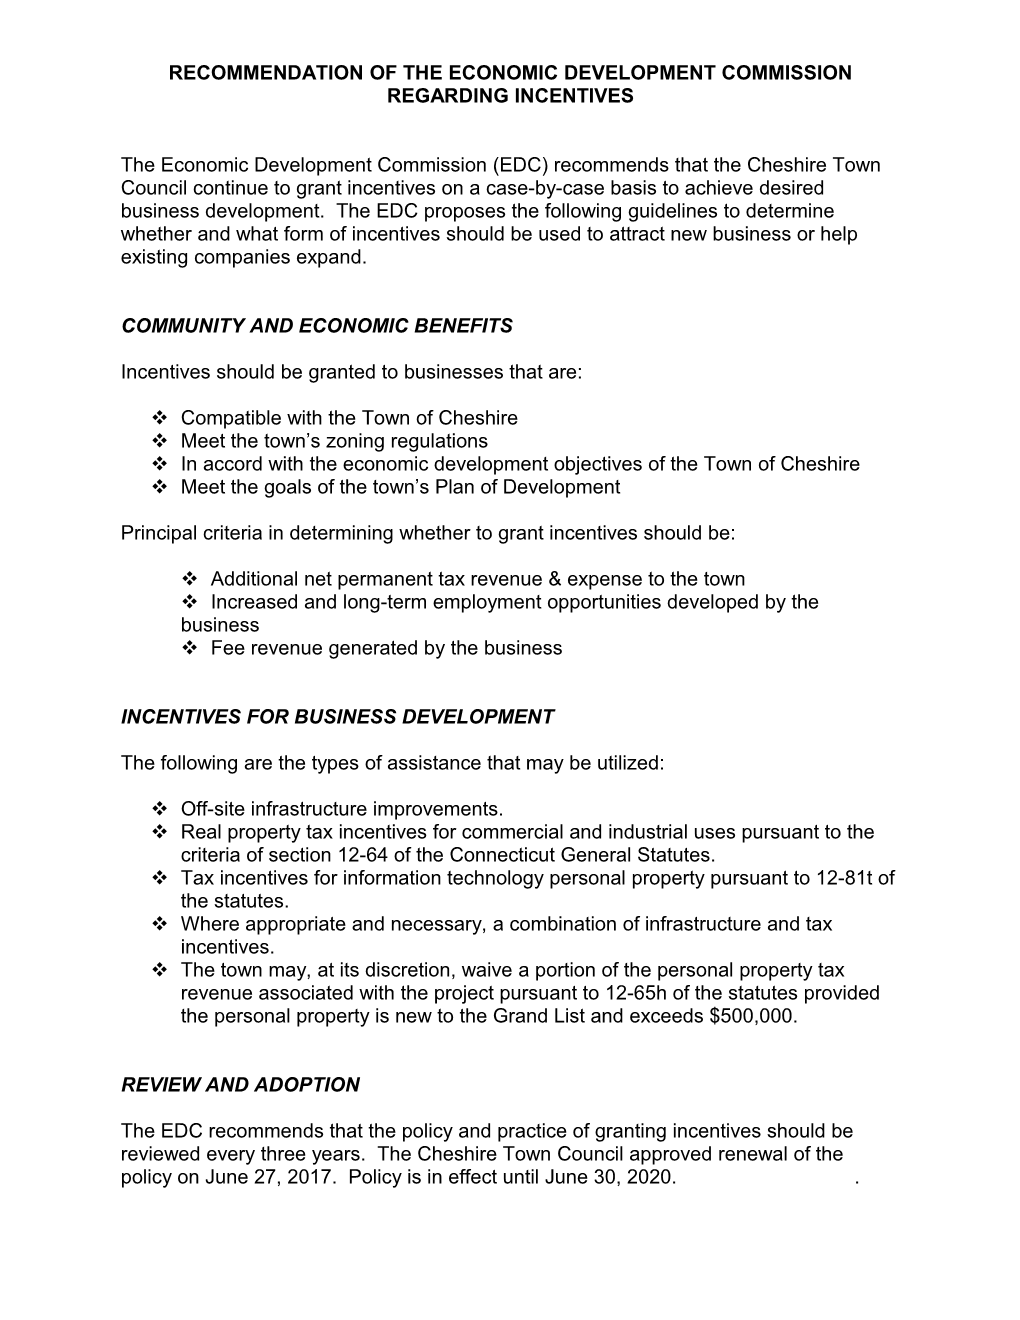 Recommendation of the Economic Development Commission Regarding Incentives